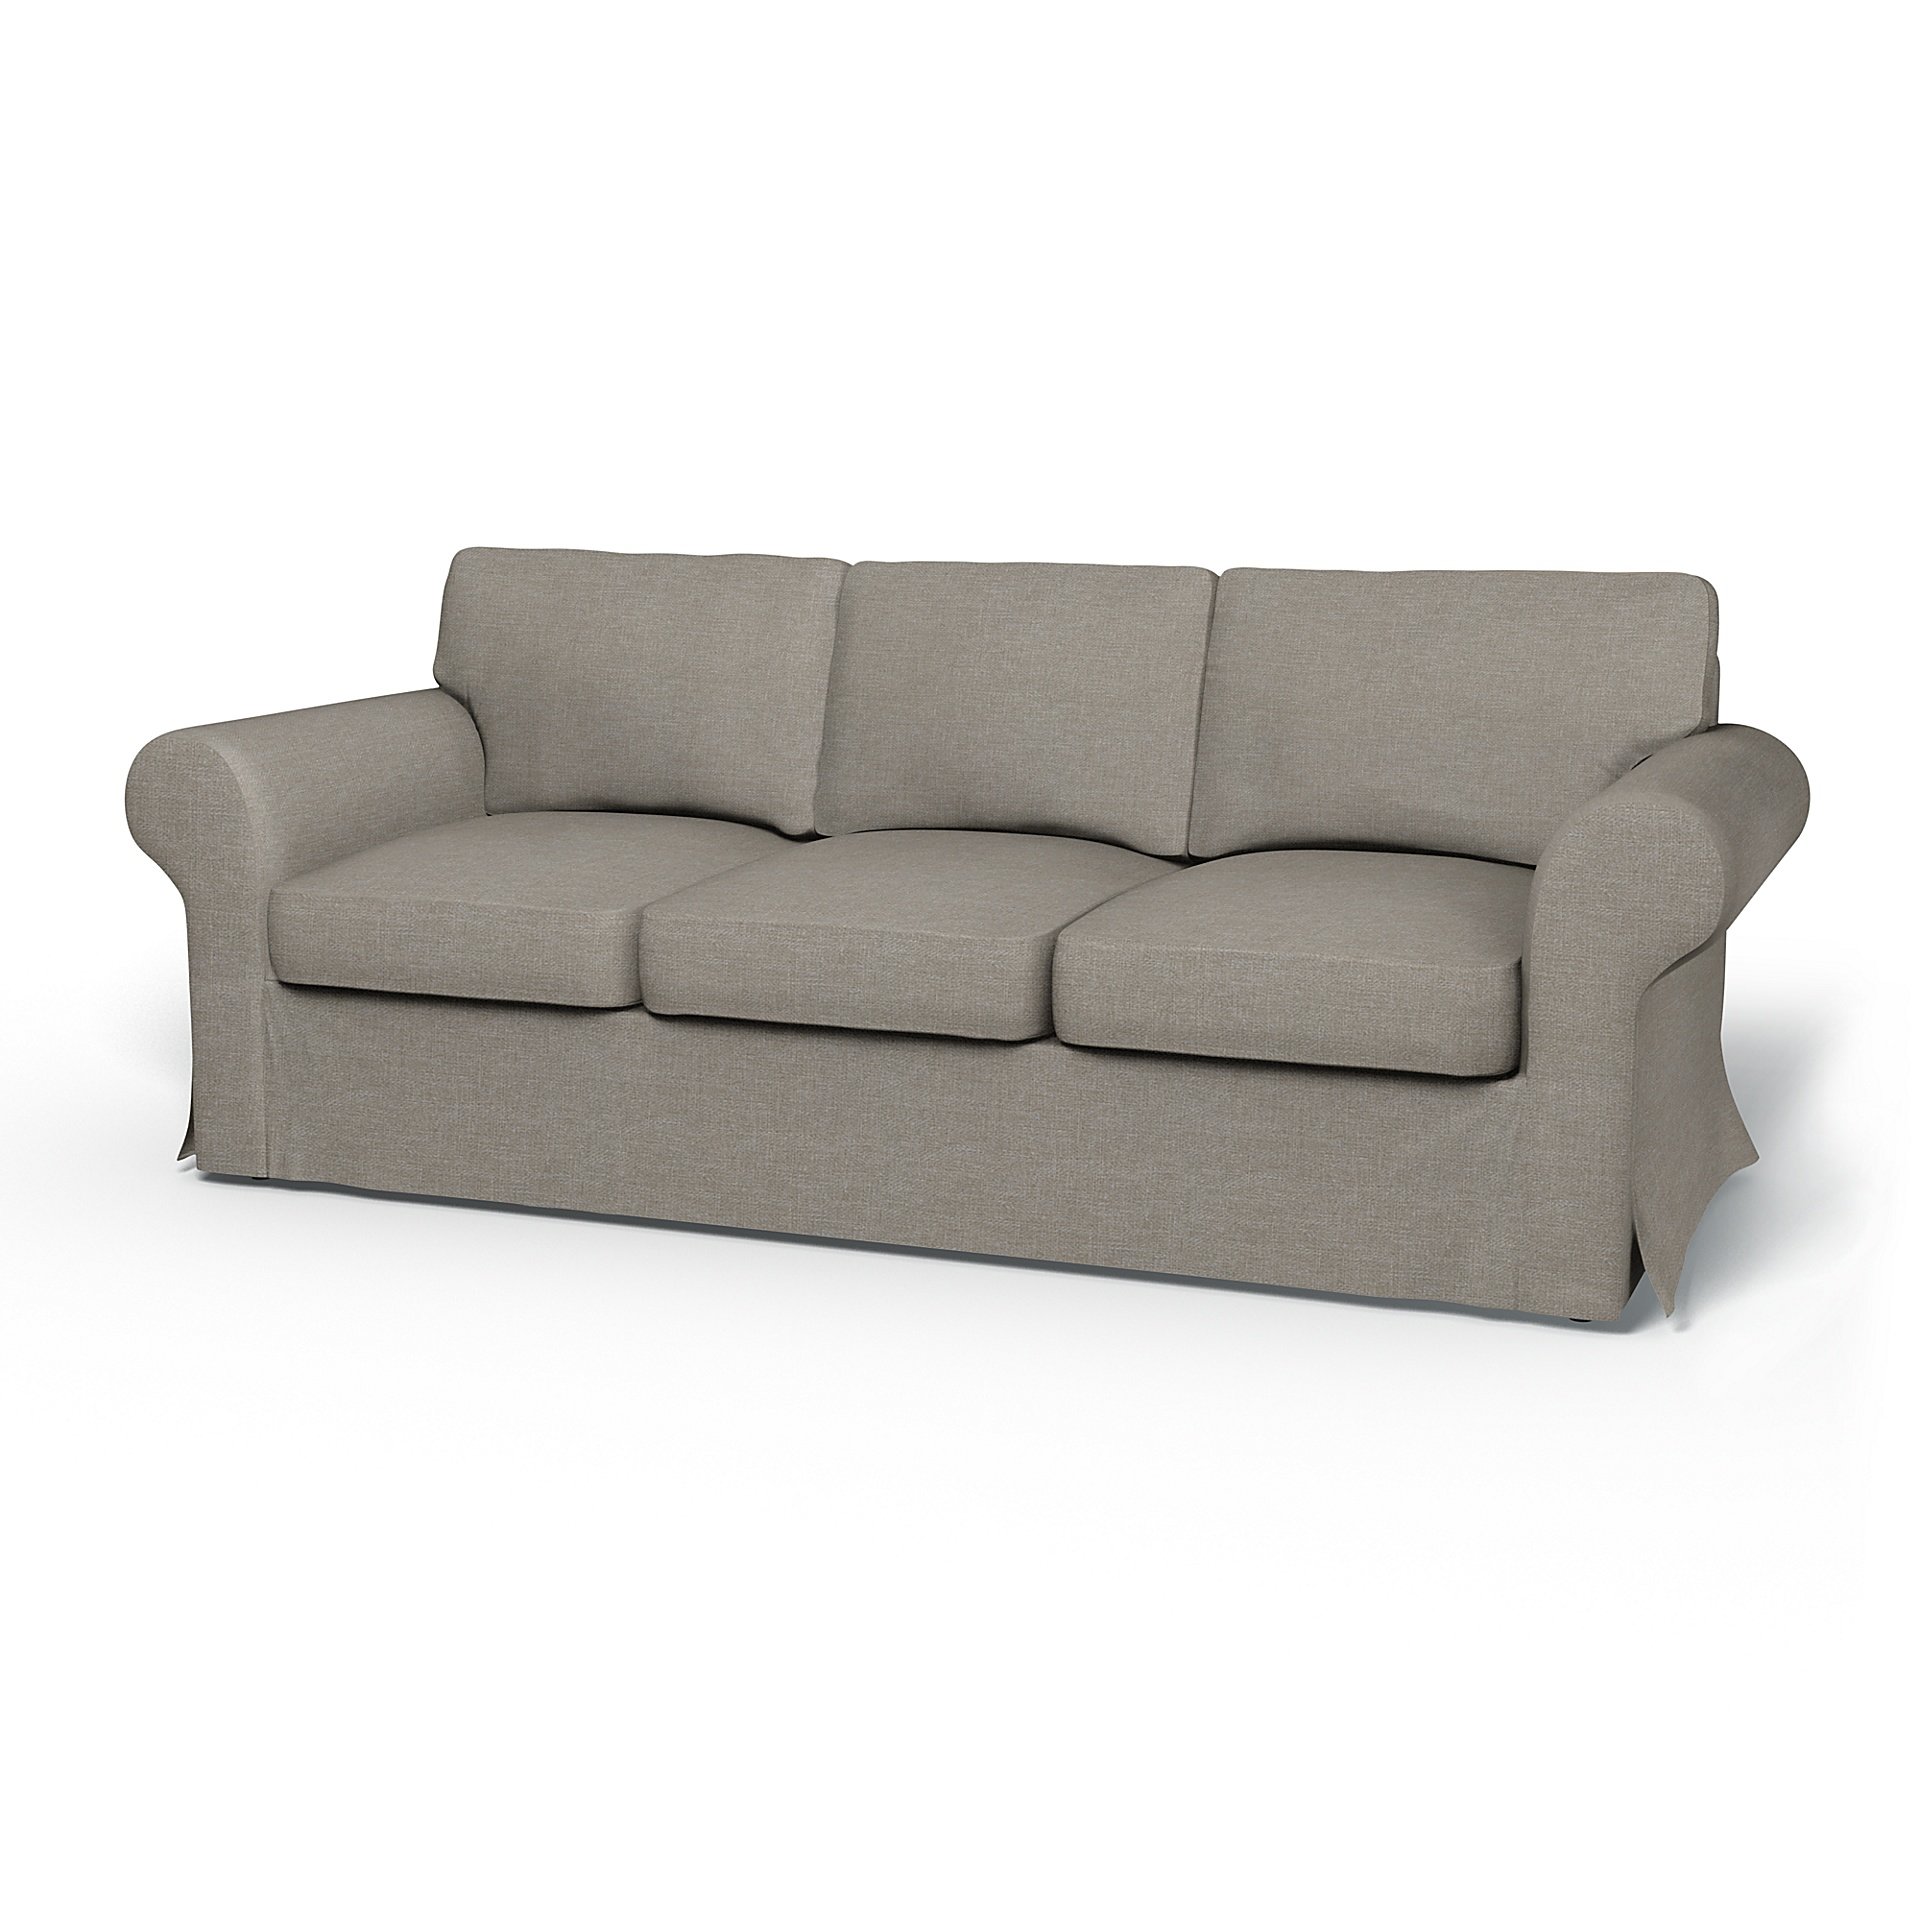 IKEA - Ektorp 3 Seater Sofa Bed Cover, Greige, Boucle & Texture - Bemz